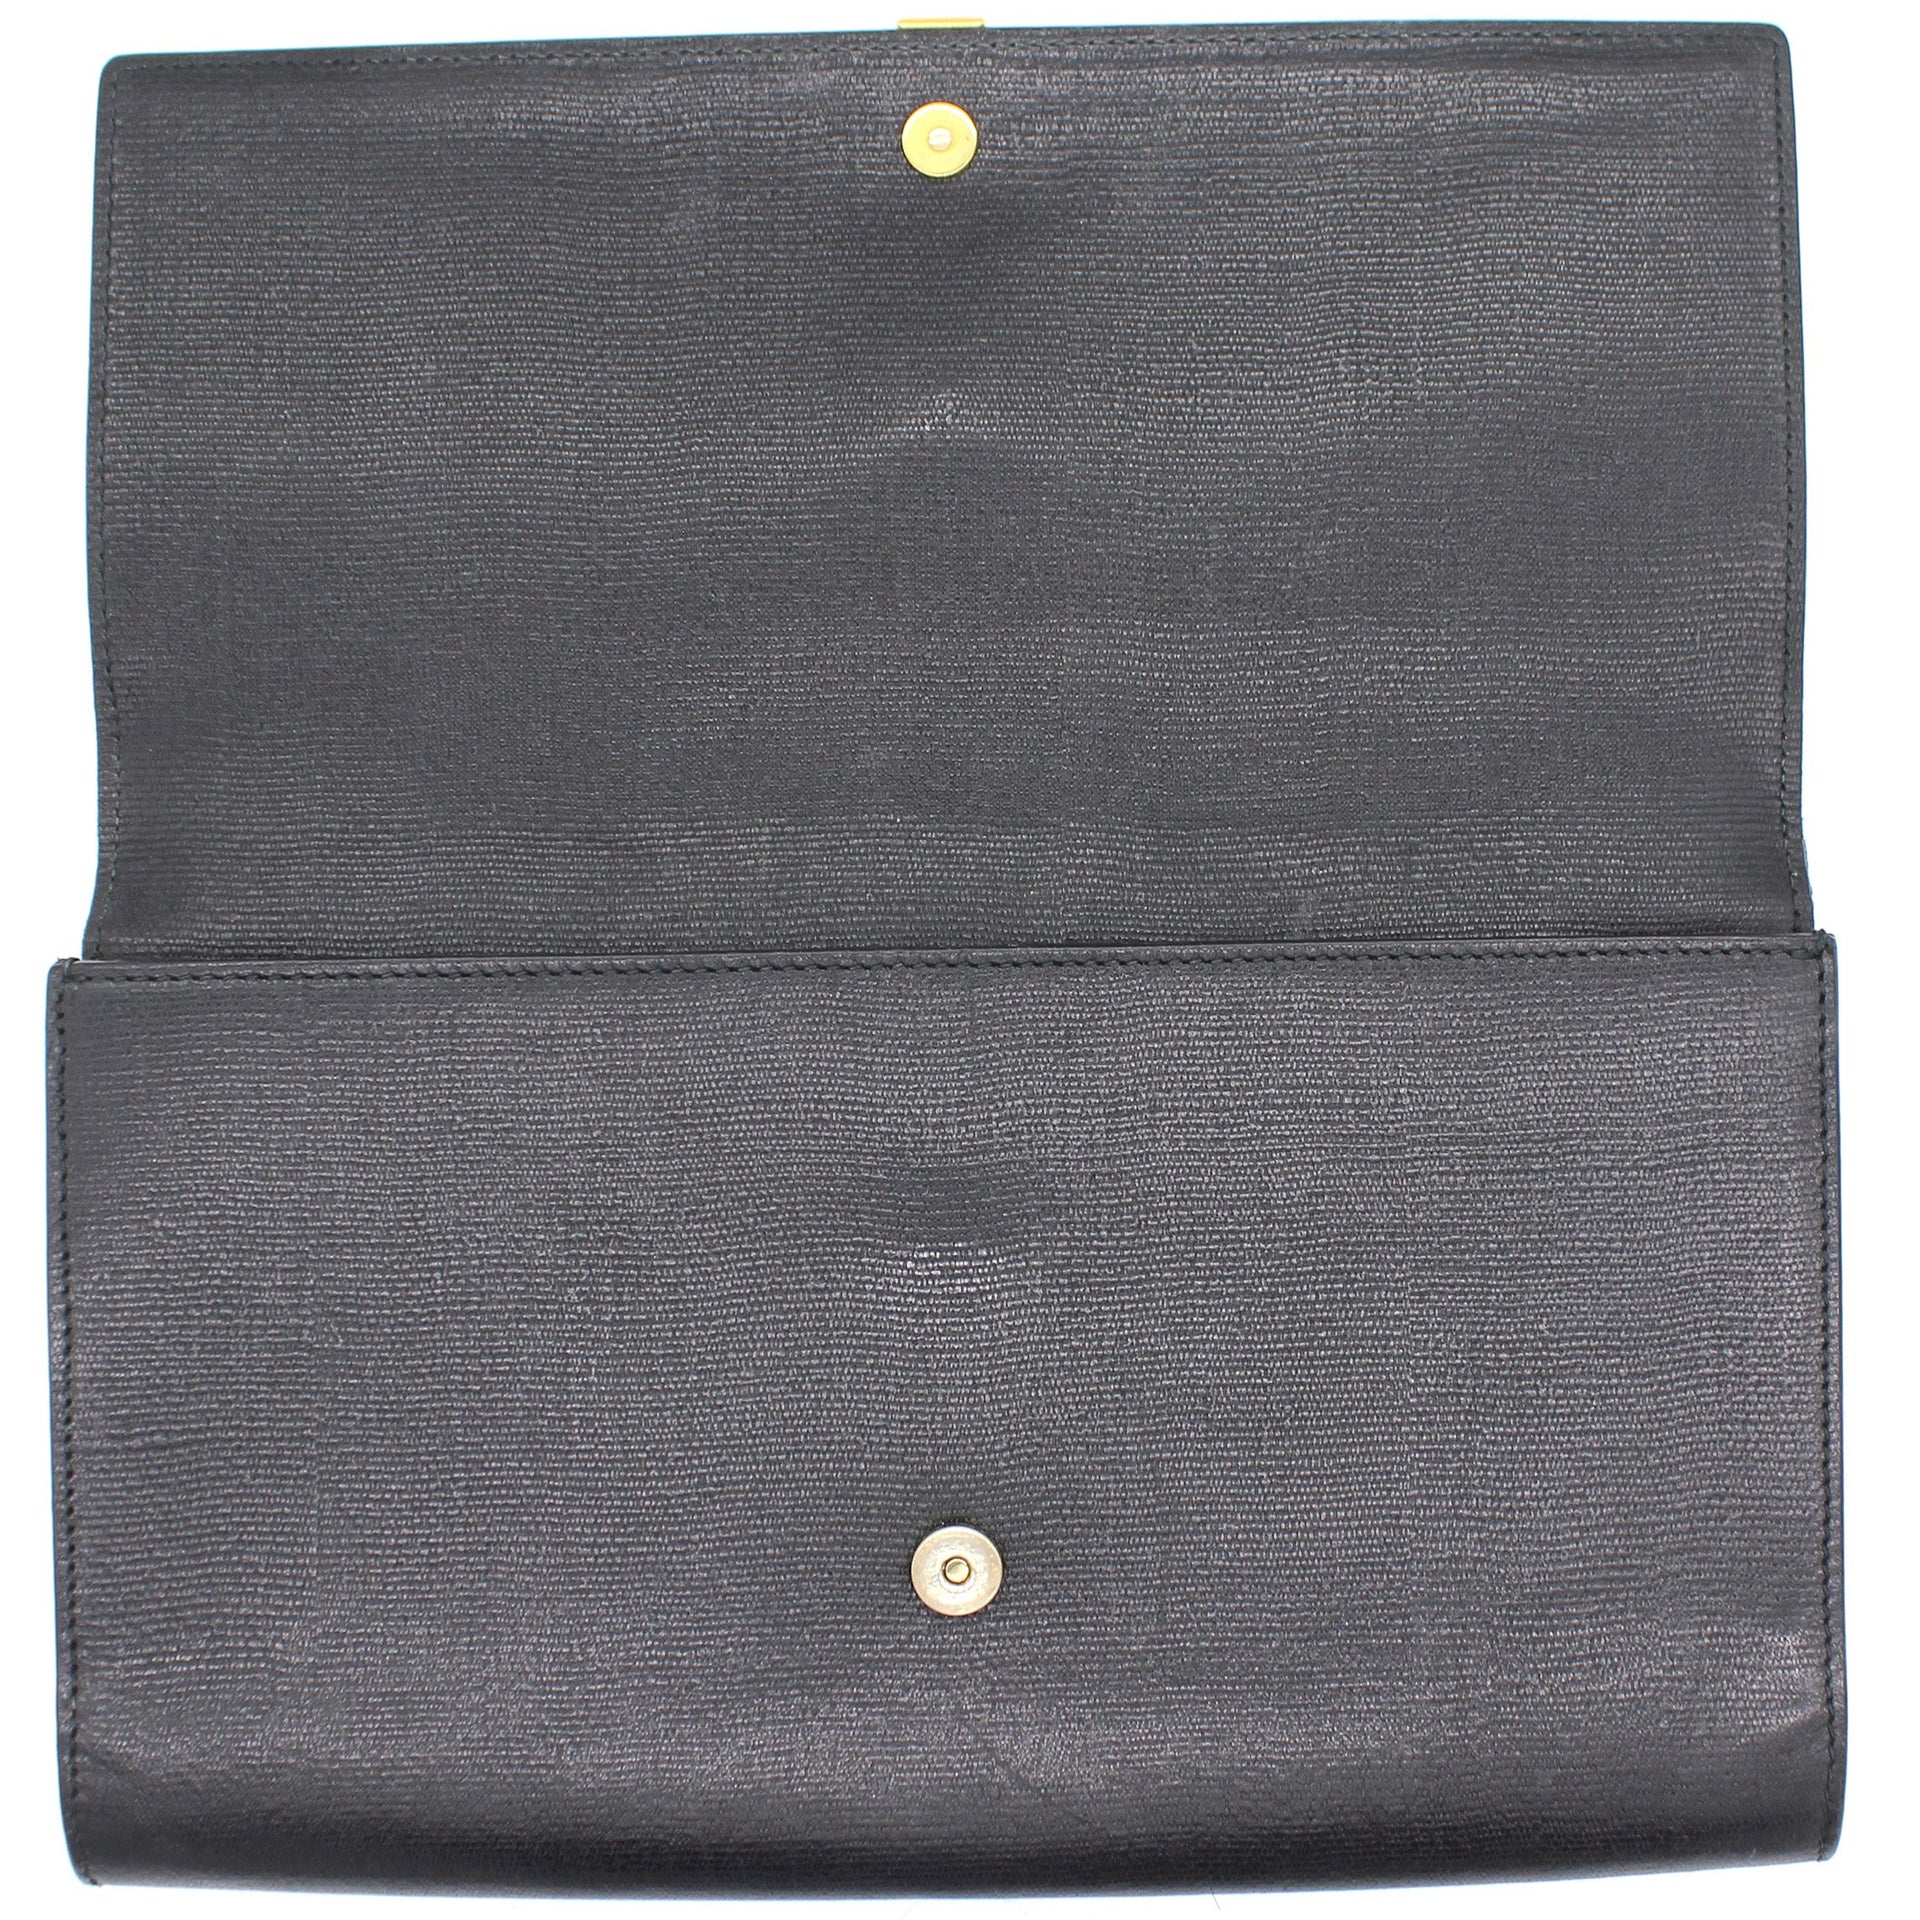 Black Calfskin Leather Ligne Y Clutch Bag